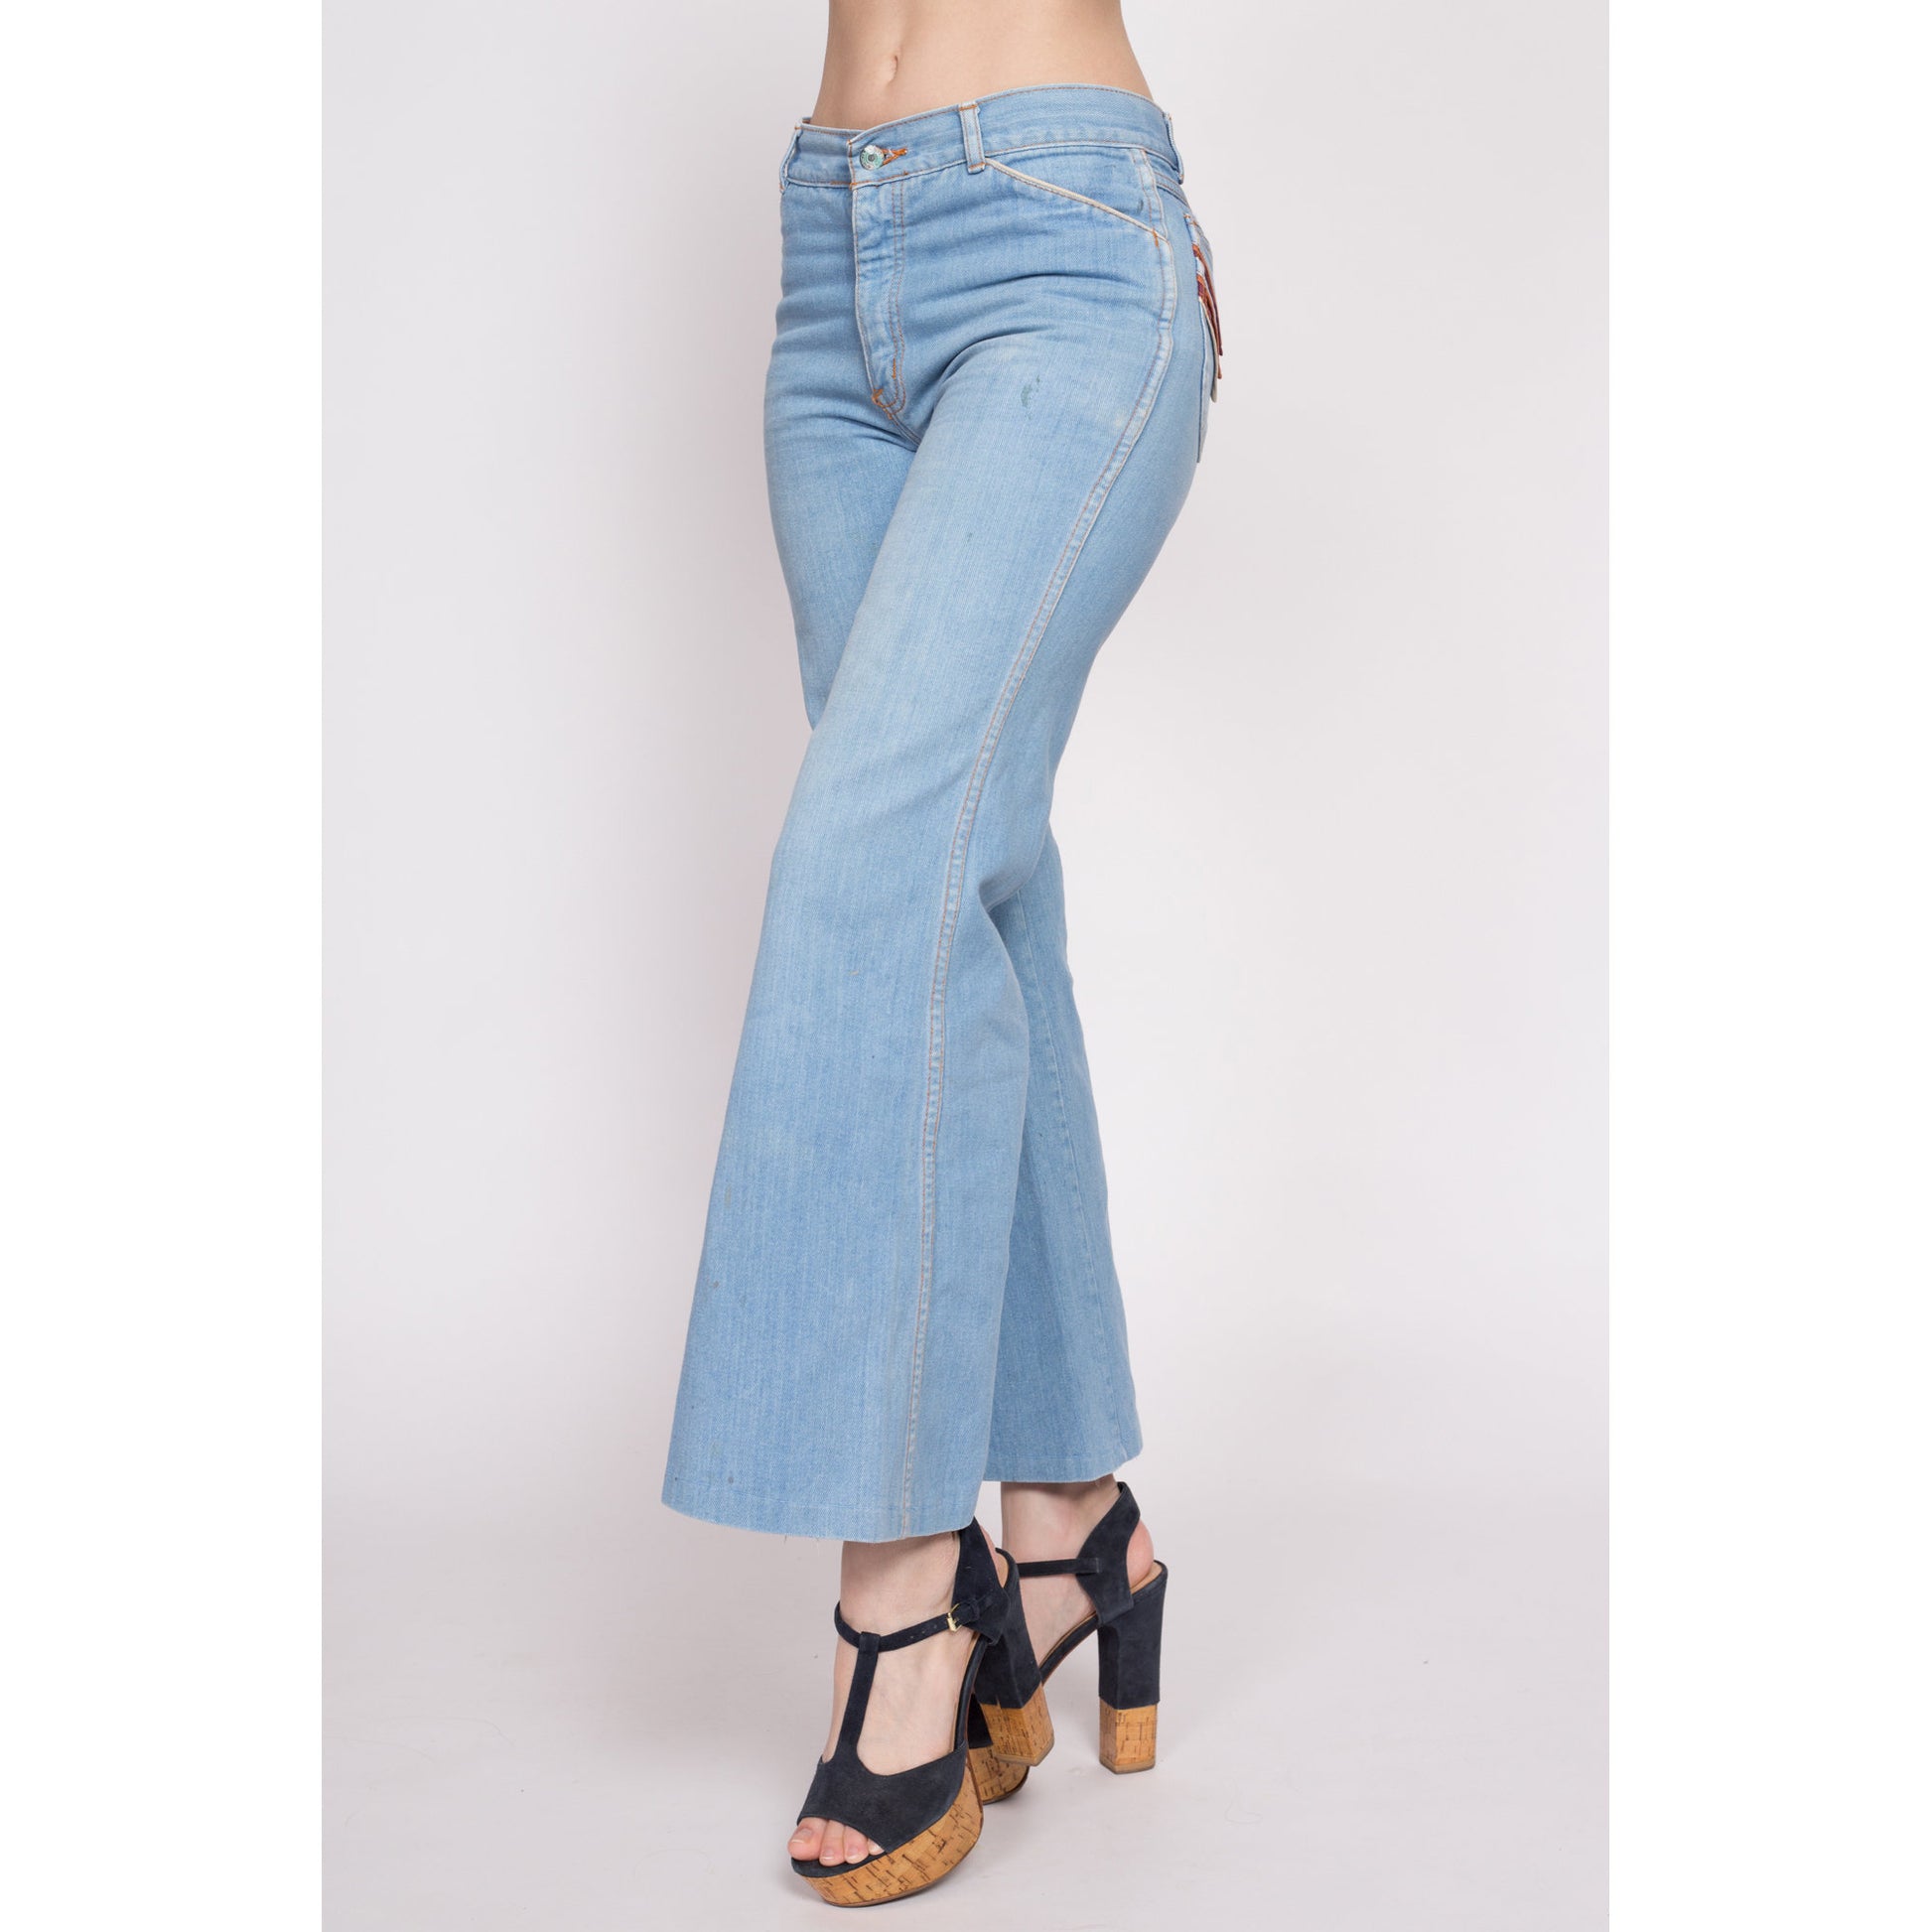 Women Bottom Wear at Rs 240/piece  Bell Bottom Jeans For Women in